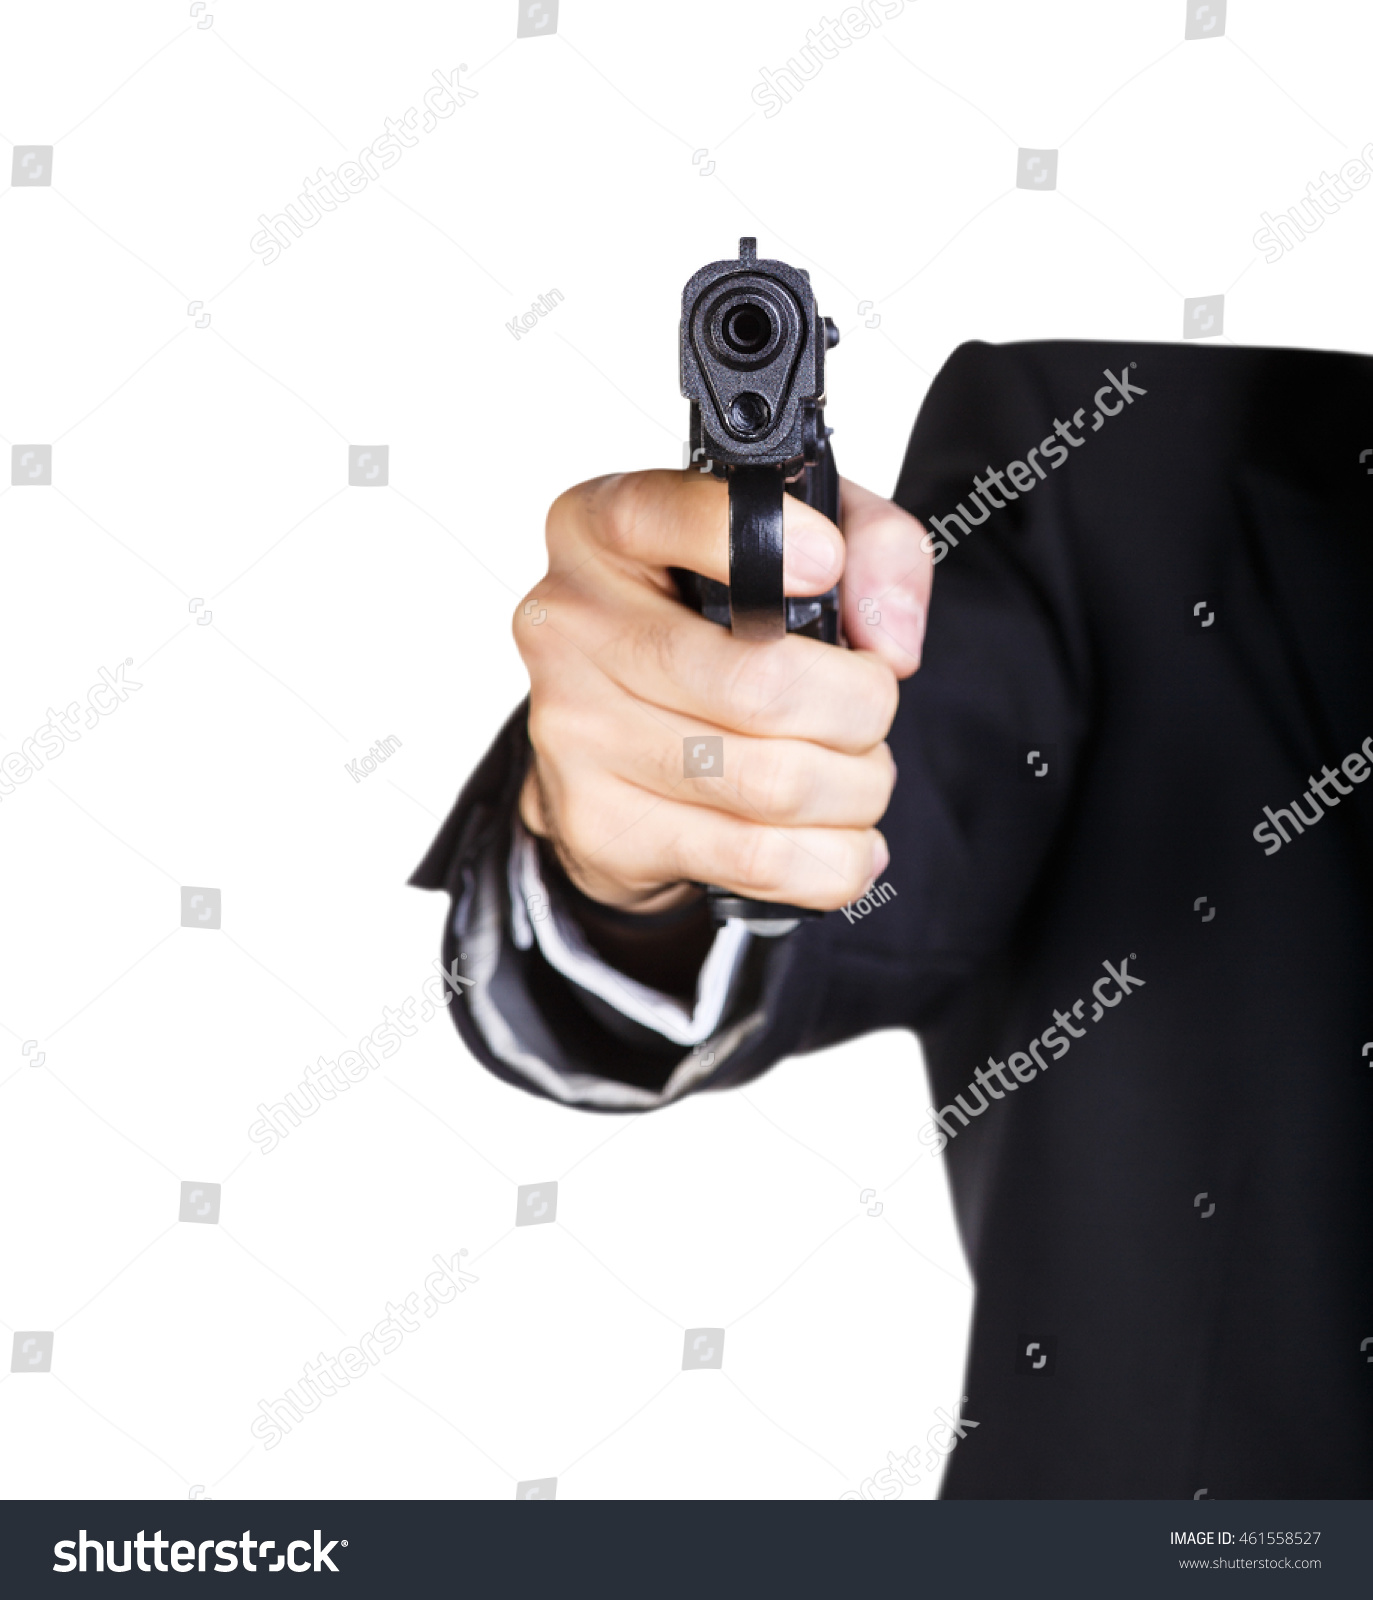 Стоковая фотография 461558527: Man Pointing Gun Camera Shutterstock.